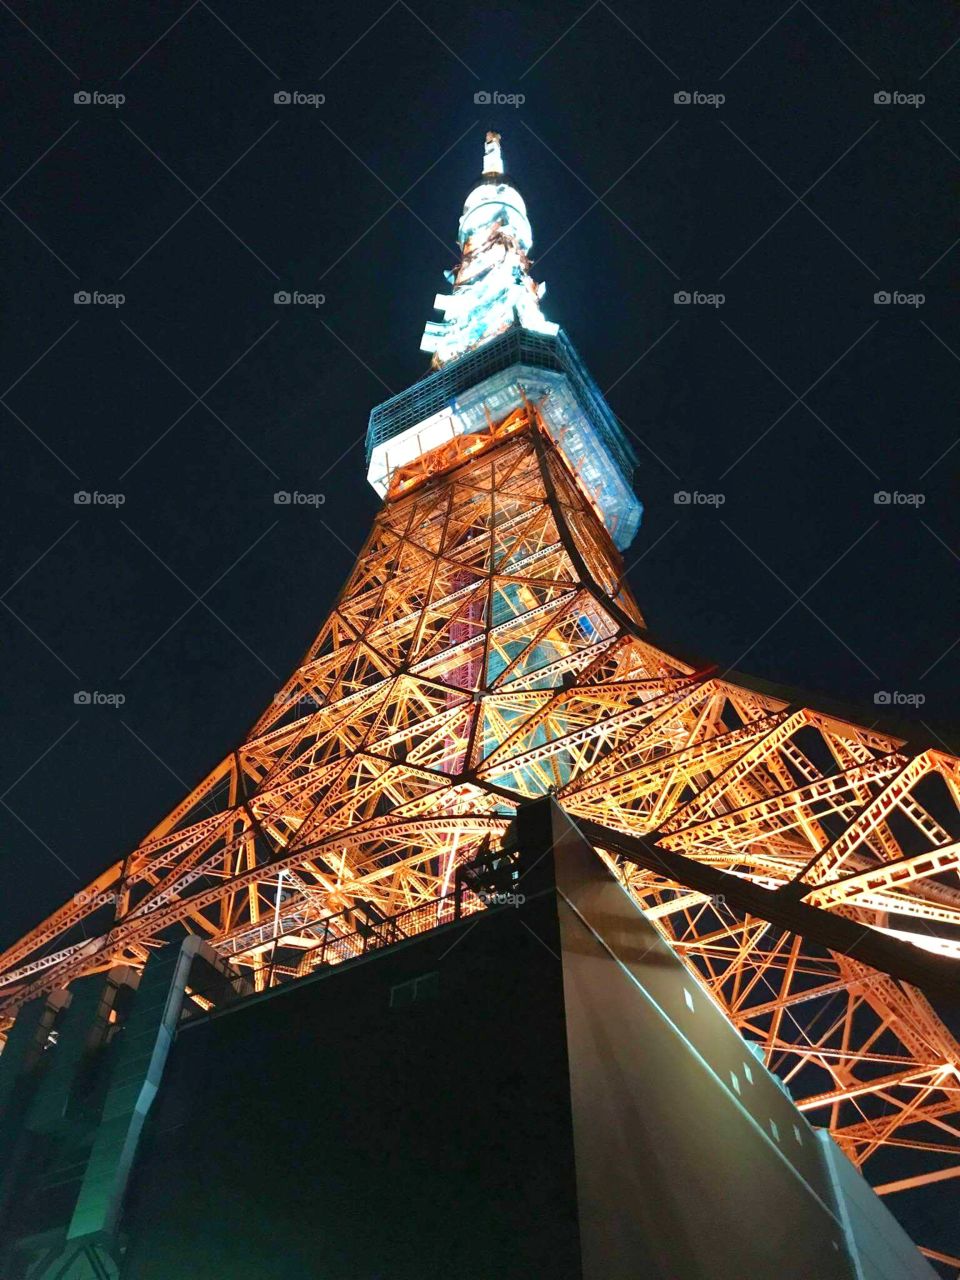 Tokyo tower 
Galaxy s7 edge photography